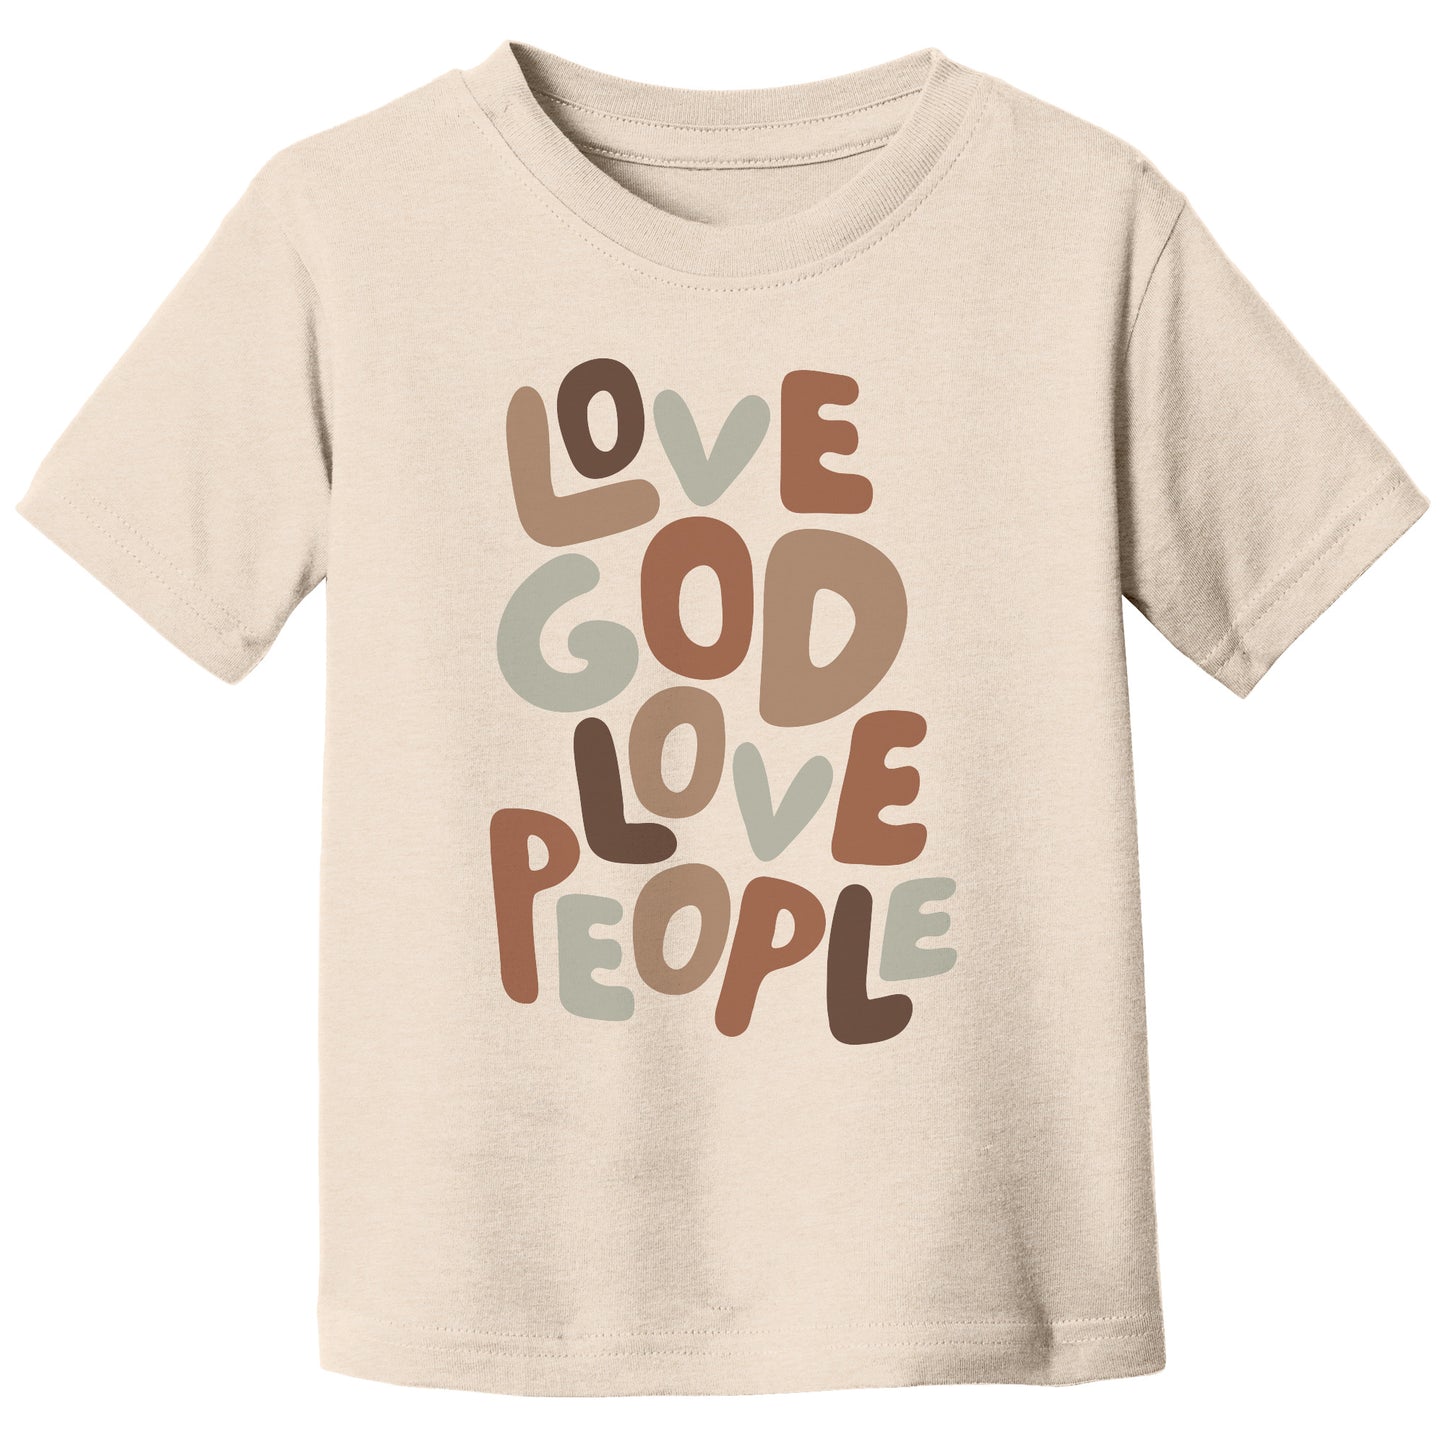 Love God Love People Toddler T-Shirt